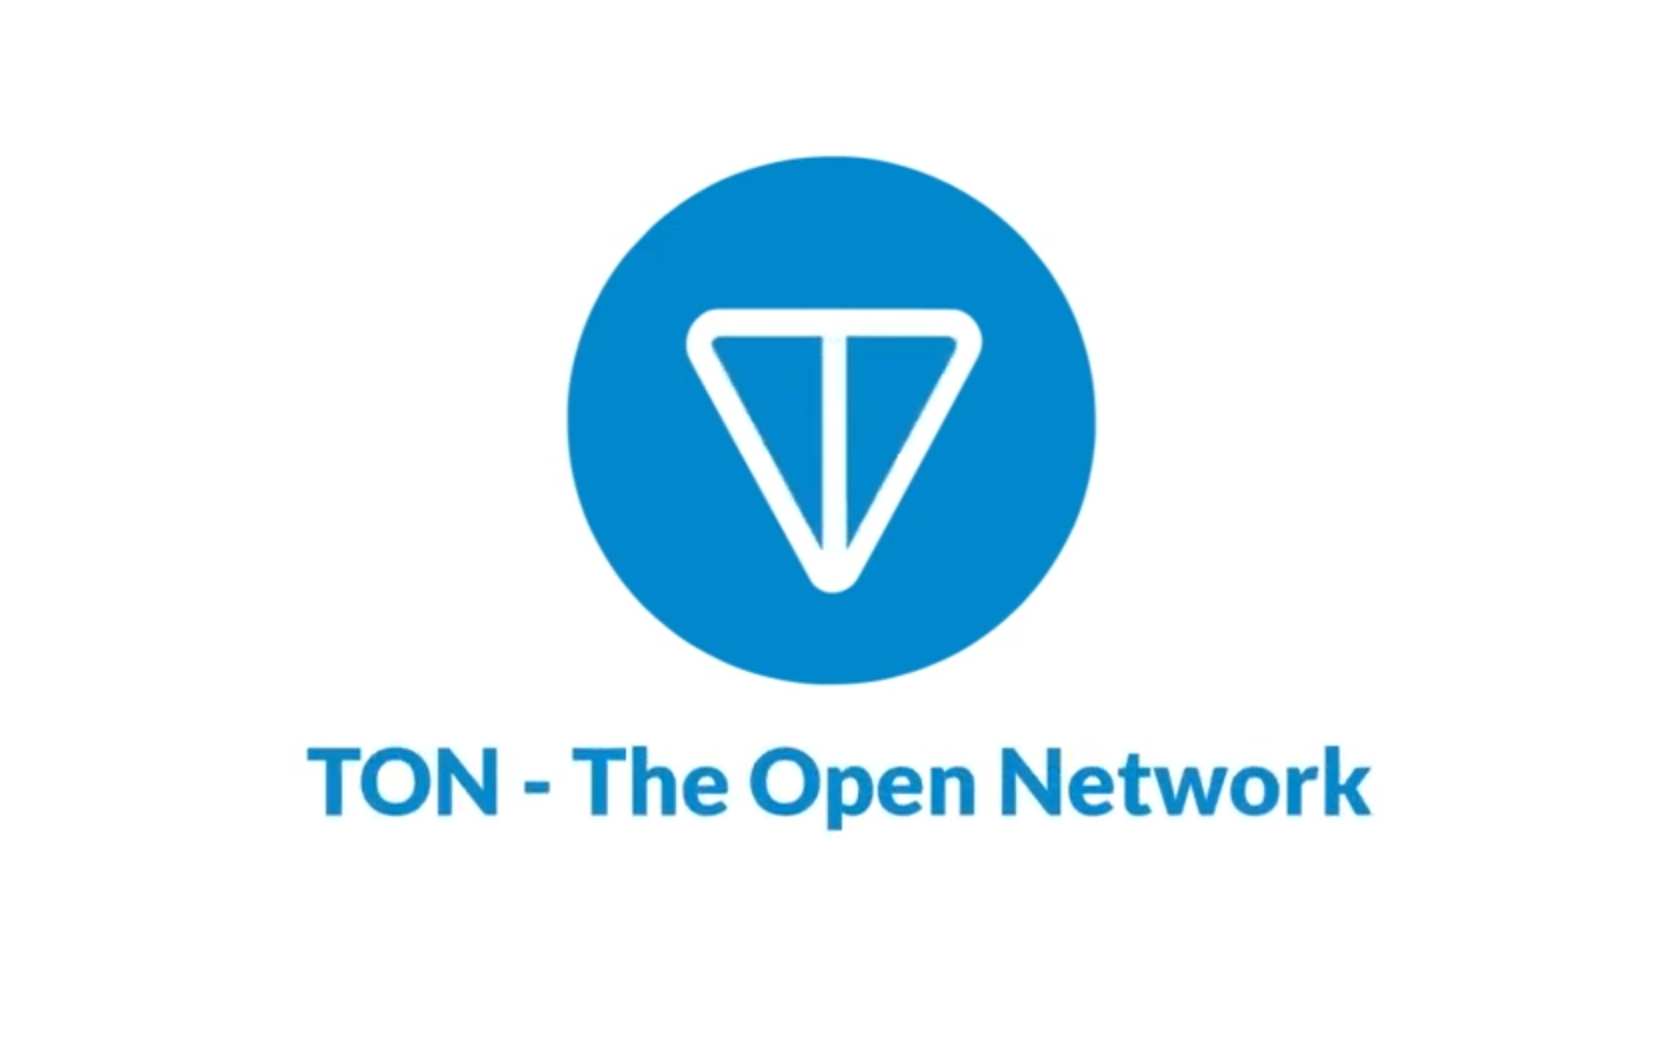 Telegram blockchain. Ton в телеграмме. Лого the open Network. The open Network ton. Telegram open Network ton.